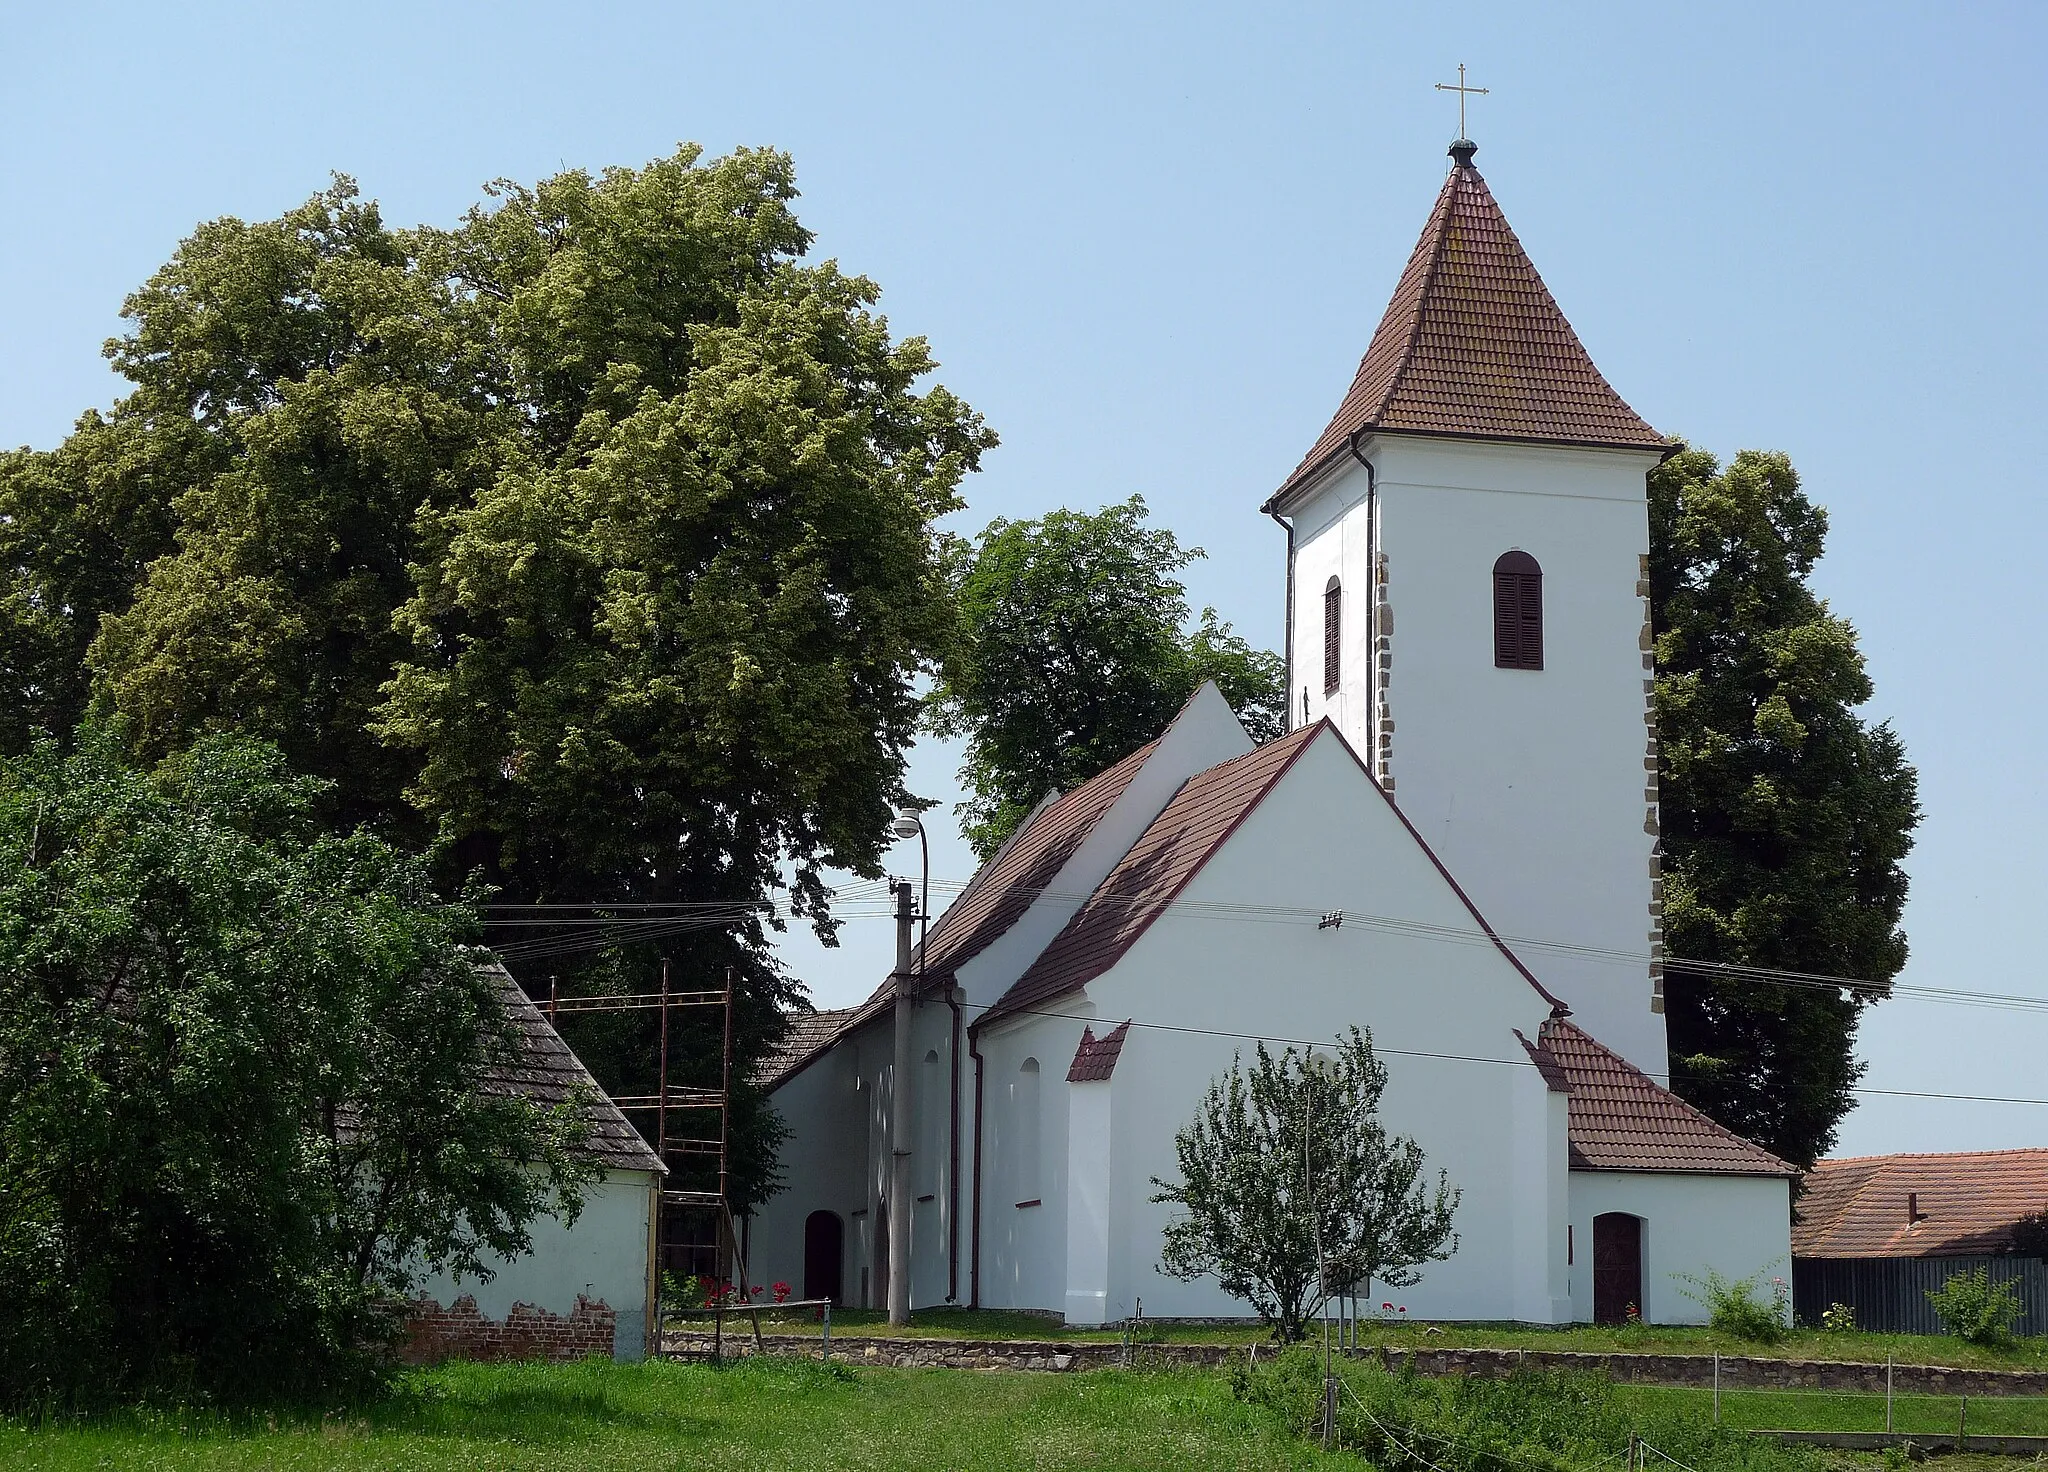 Photo showing: Village of Horní Bukovsko, Czech Republic, church